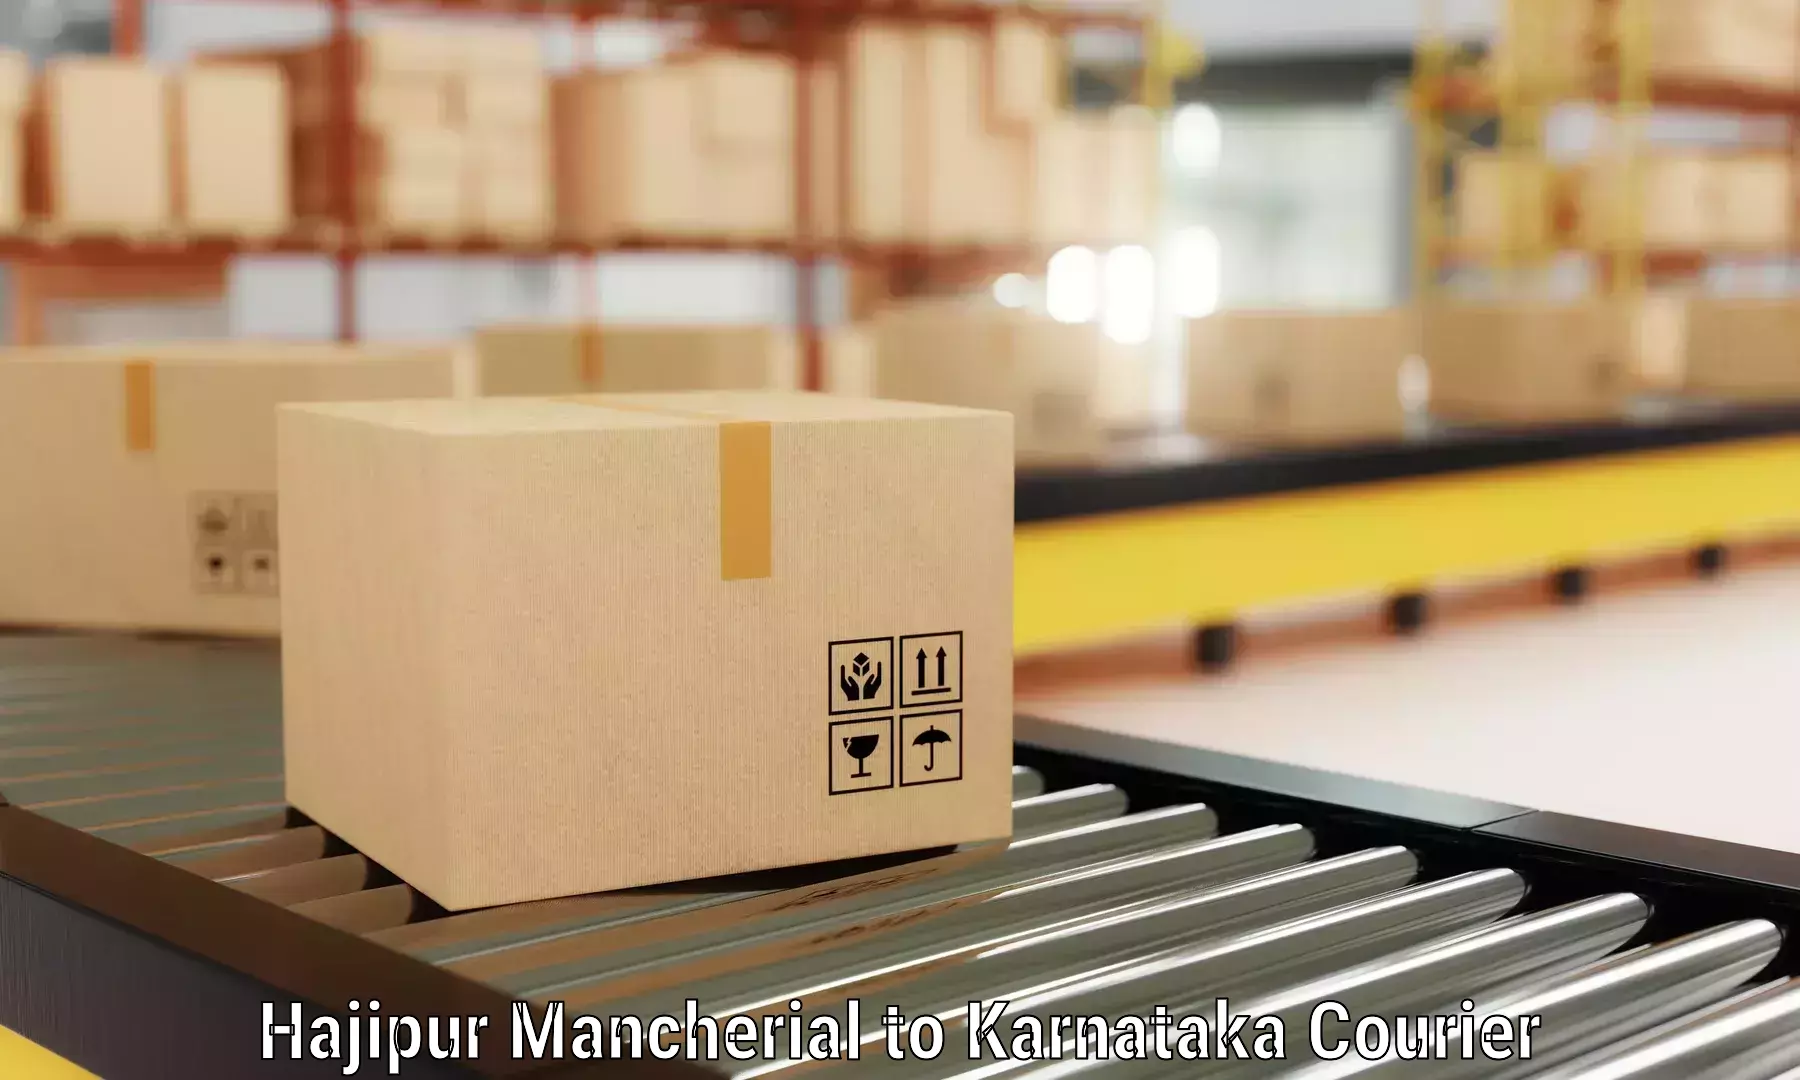 Professional moving company Hajipur Mancherial to Saundatti Yallamma